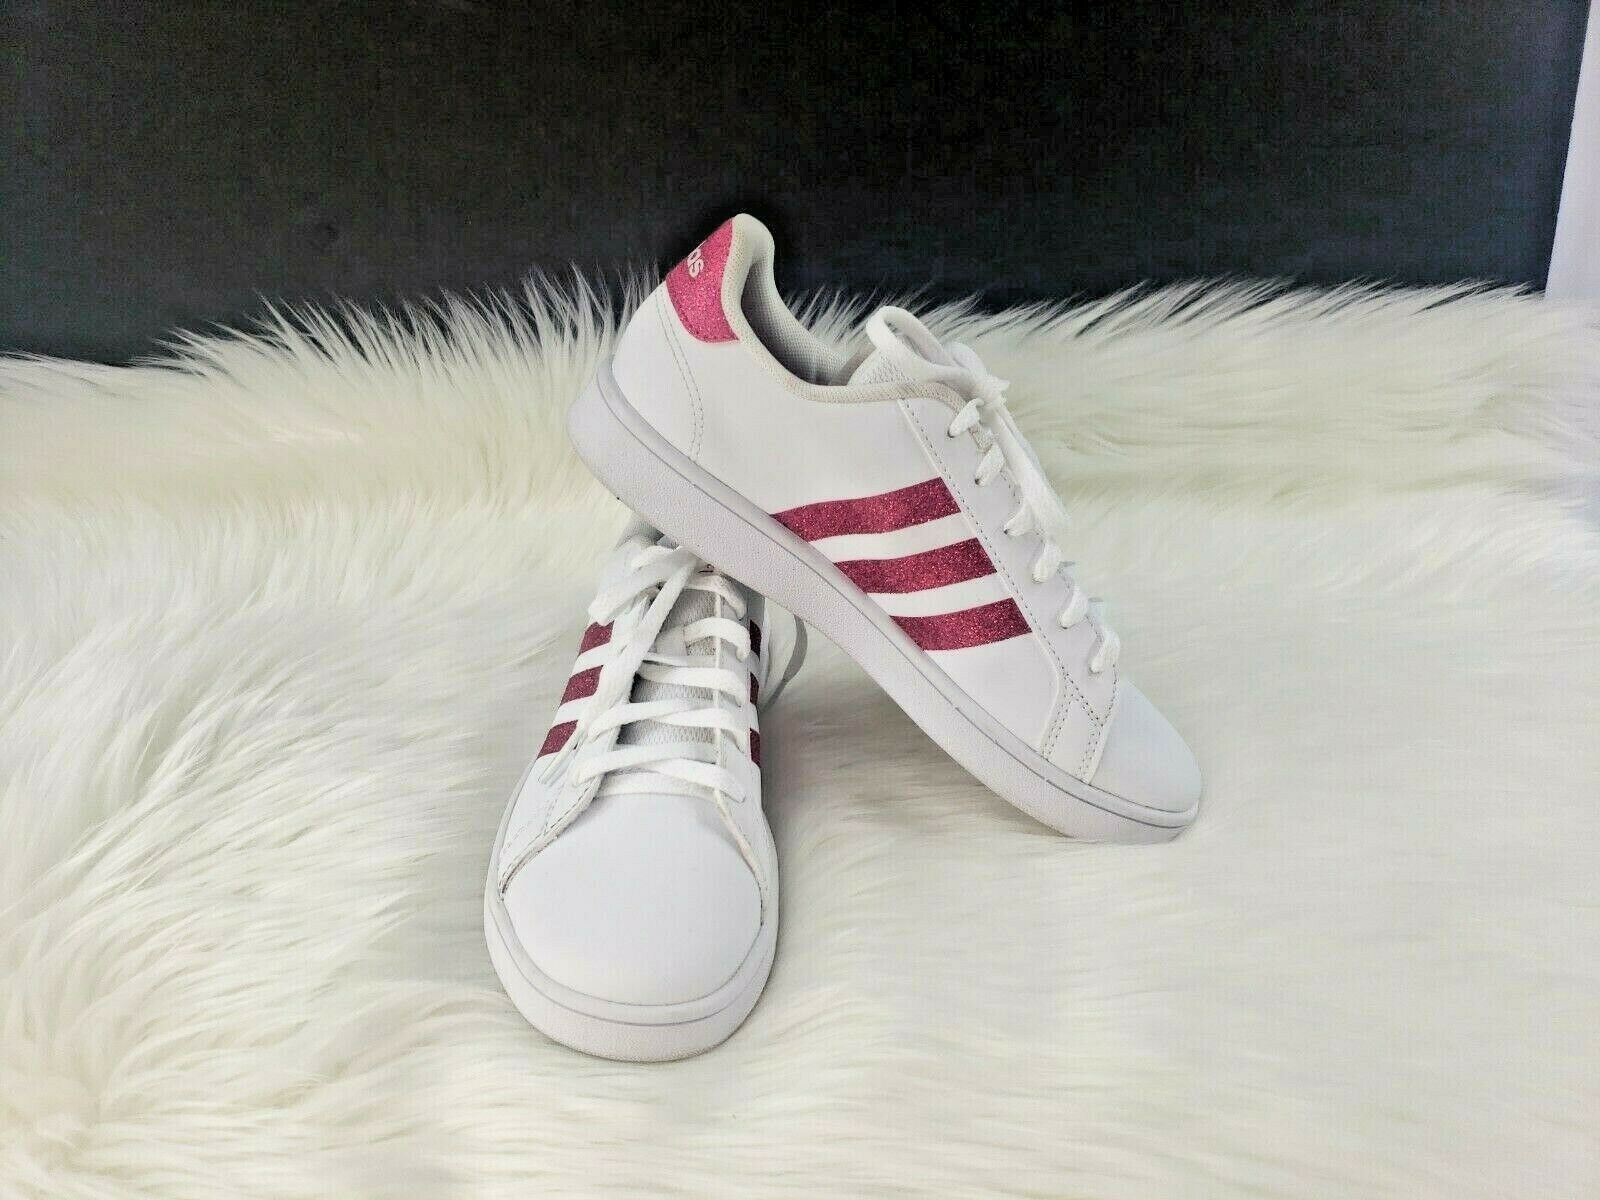 Adidas Grand Court K Shoes White Pink Glitter 3-Stripes EG5136 Girls Youth Sz 4